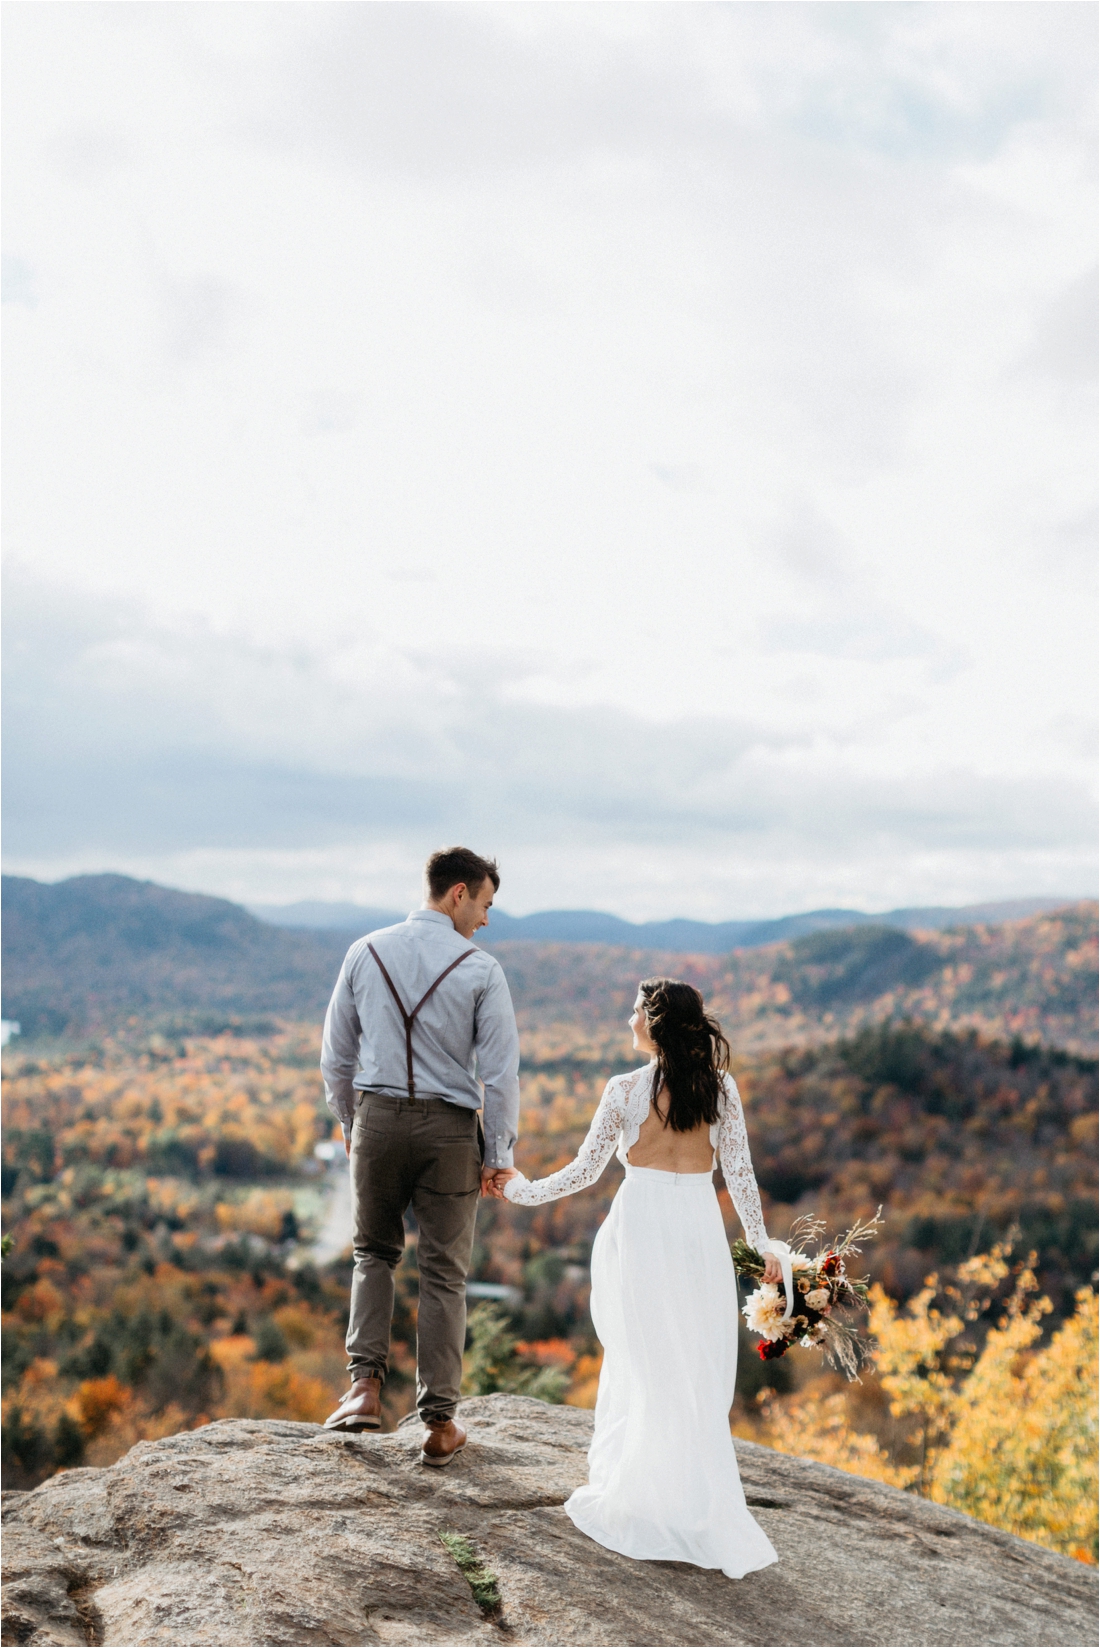 Elopement on Rocky Mountain near Inlet, Adirondacks | Shaw Photo Co. | Adirondack Wedding Photographer